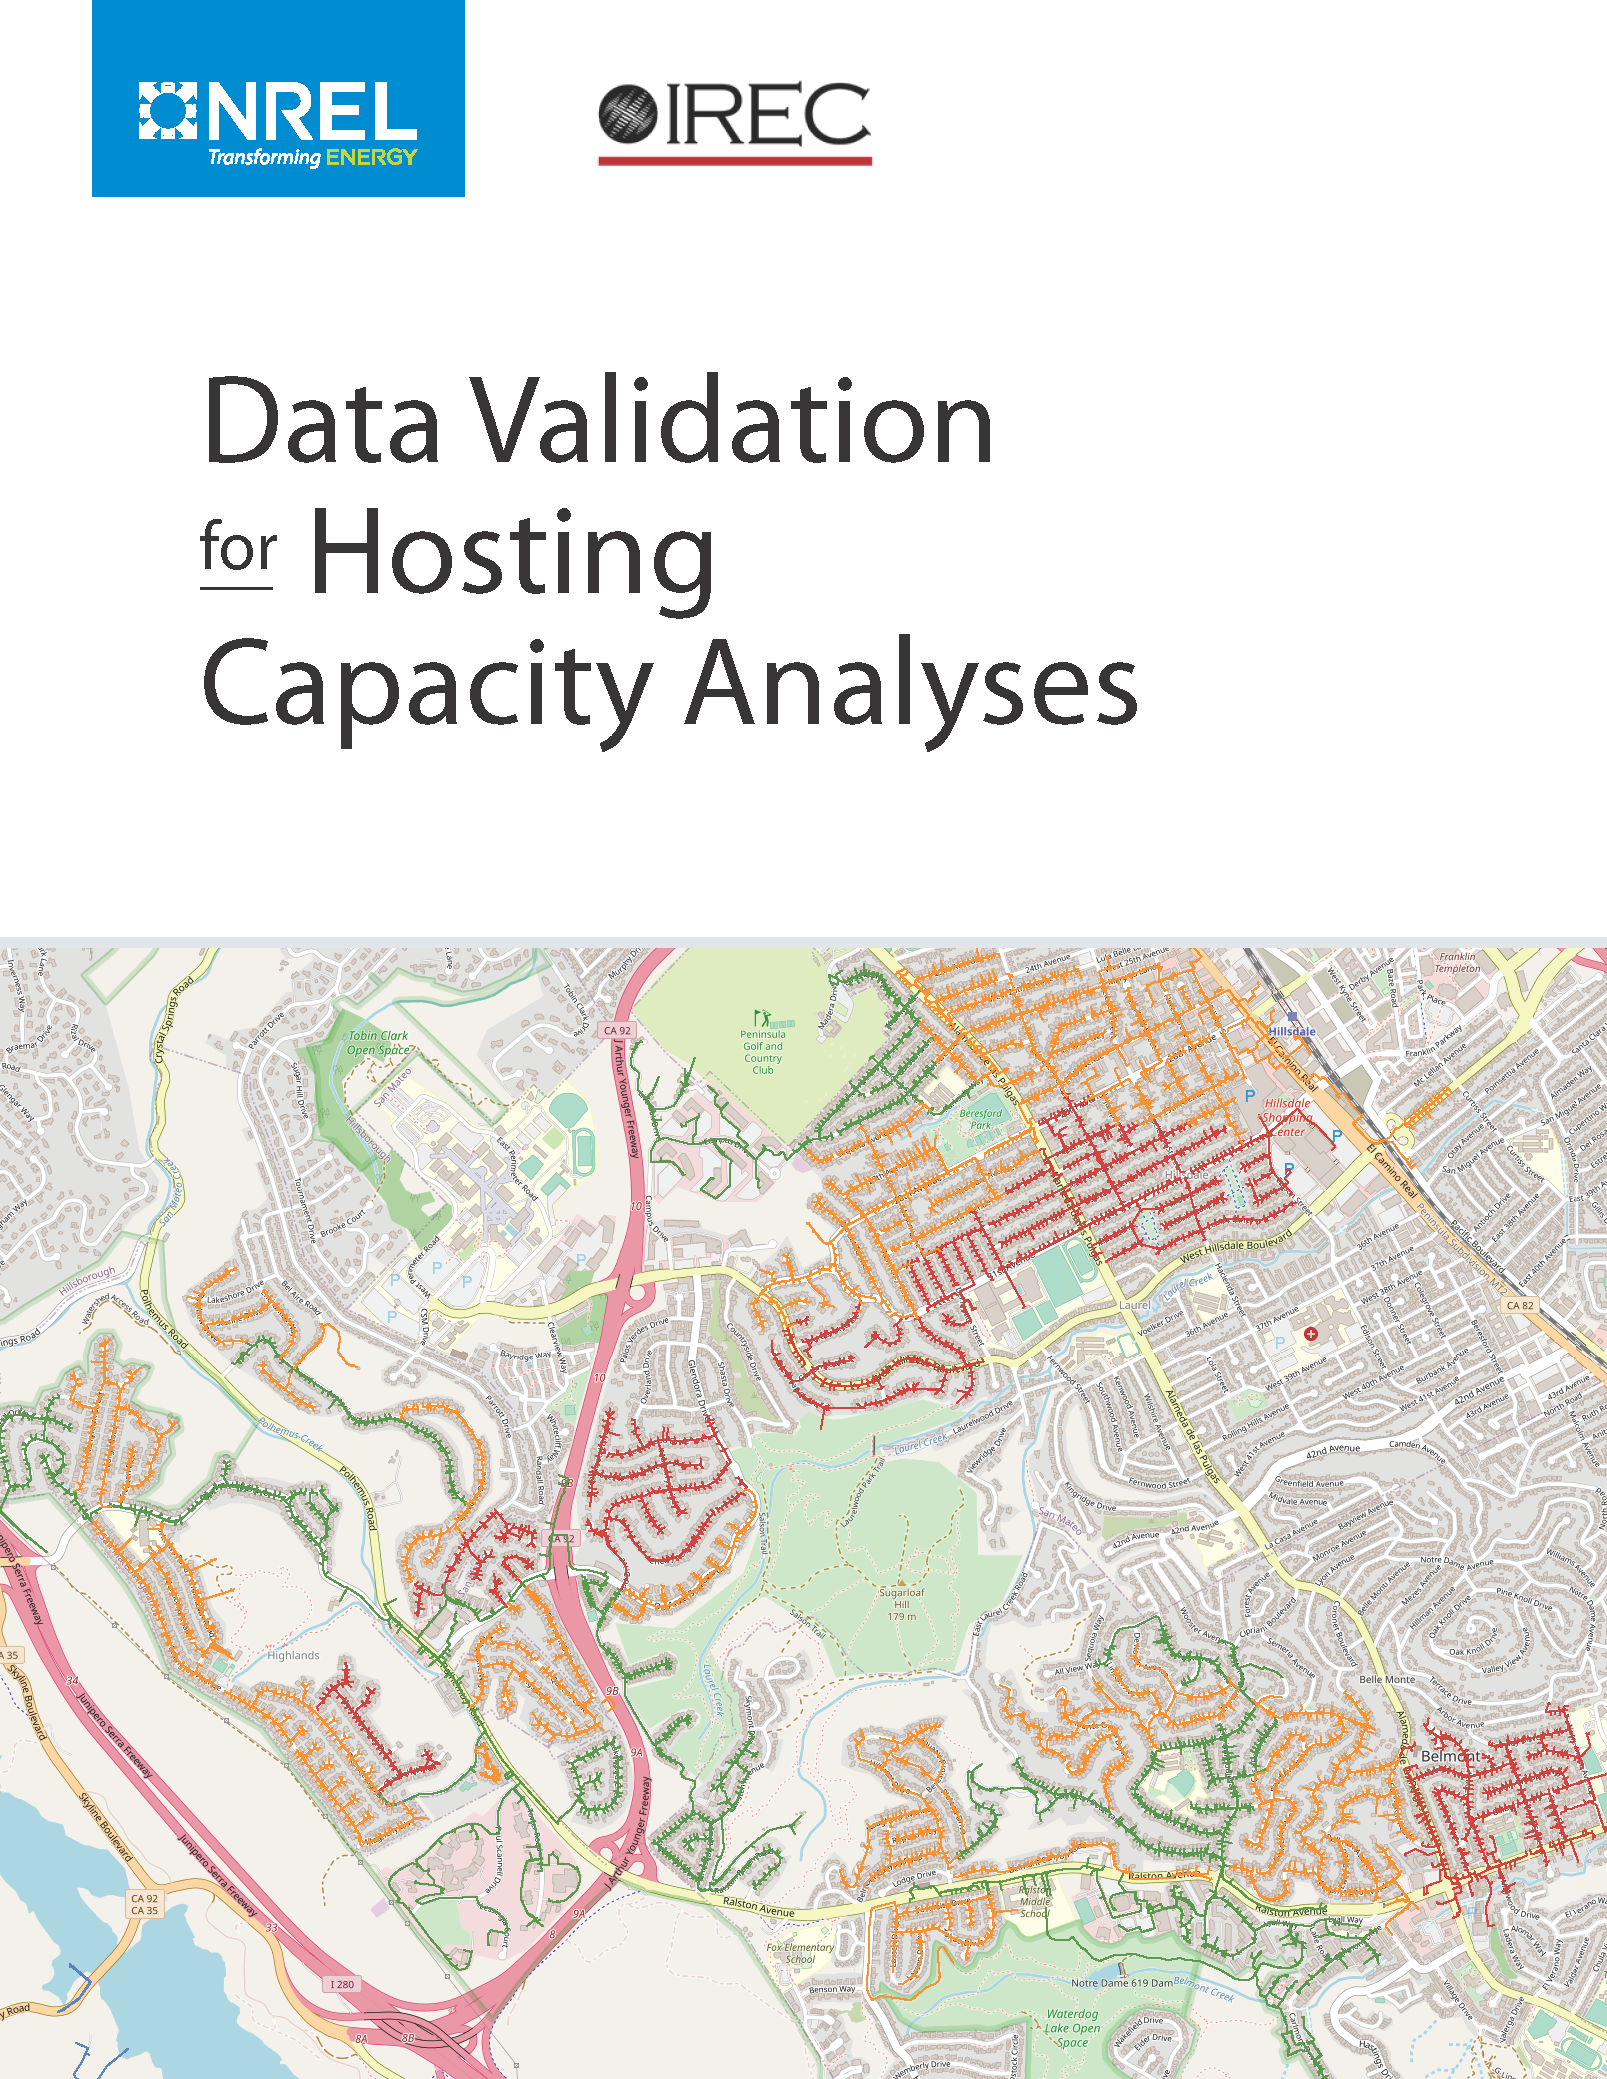 Data Validation for Hosting Capacity Analyses